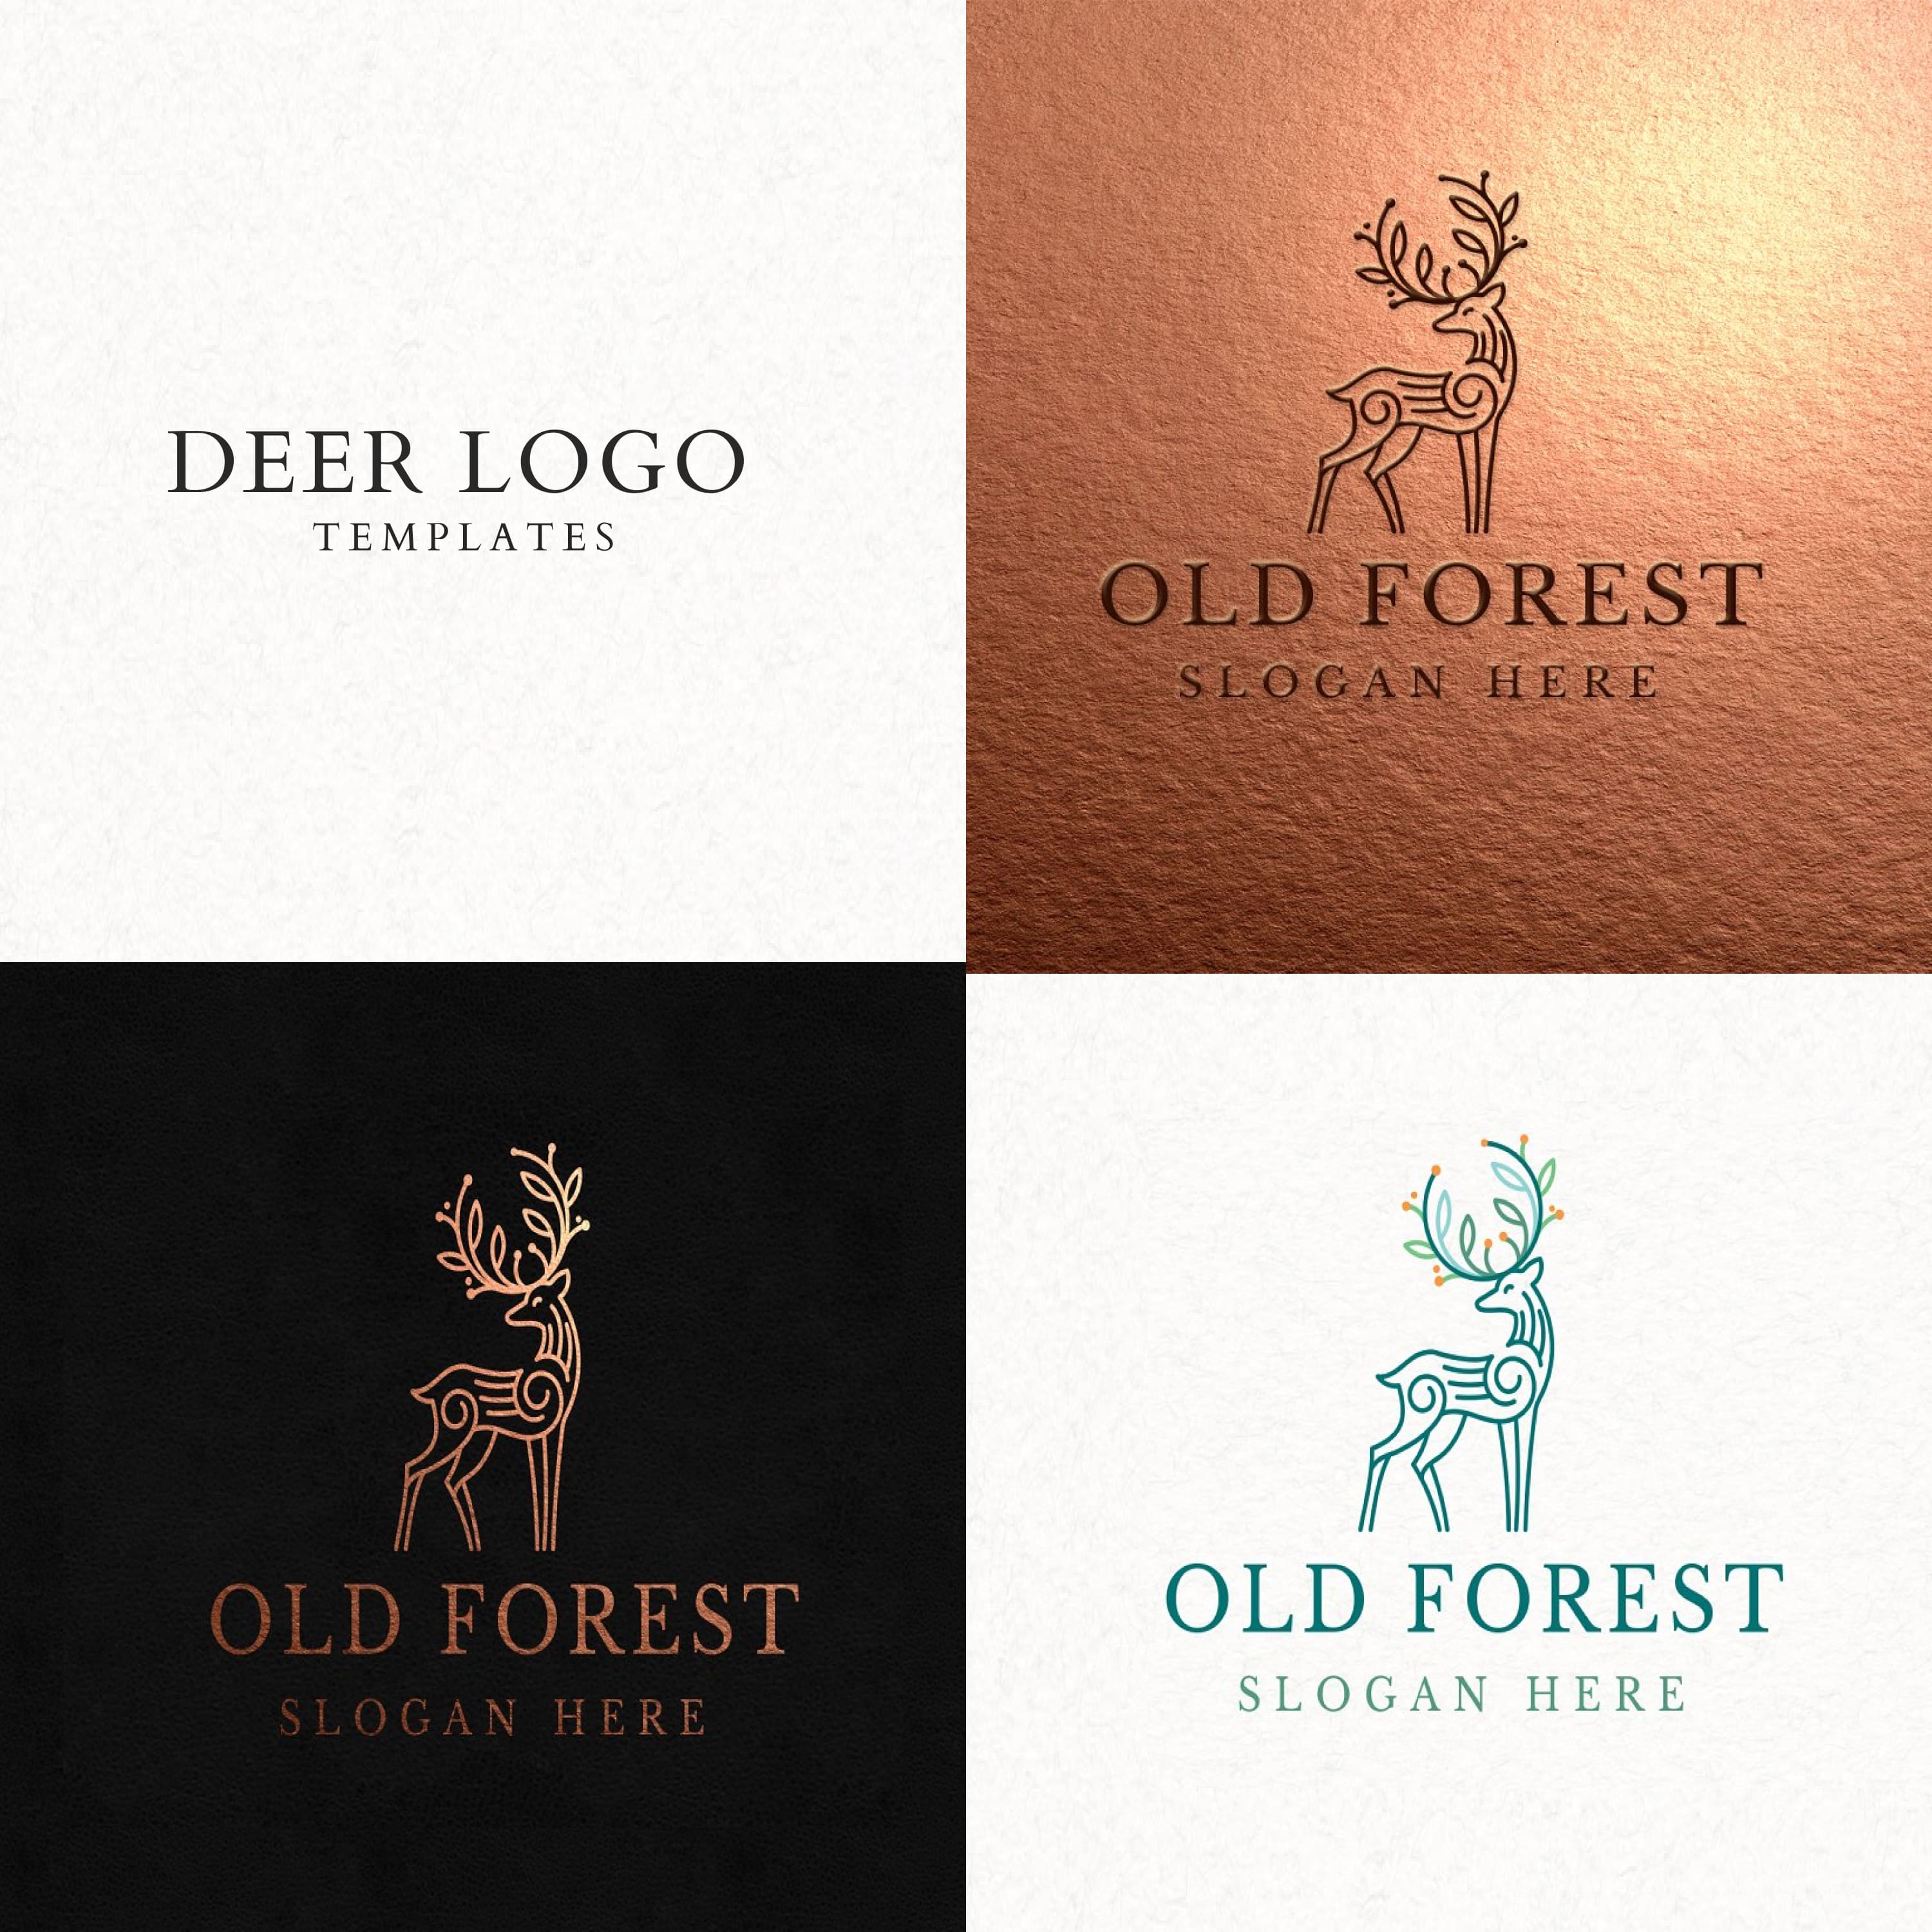 Deer Logo Template cover.